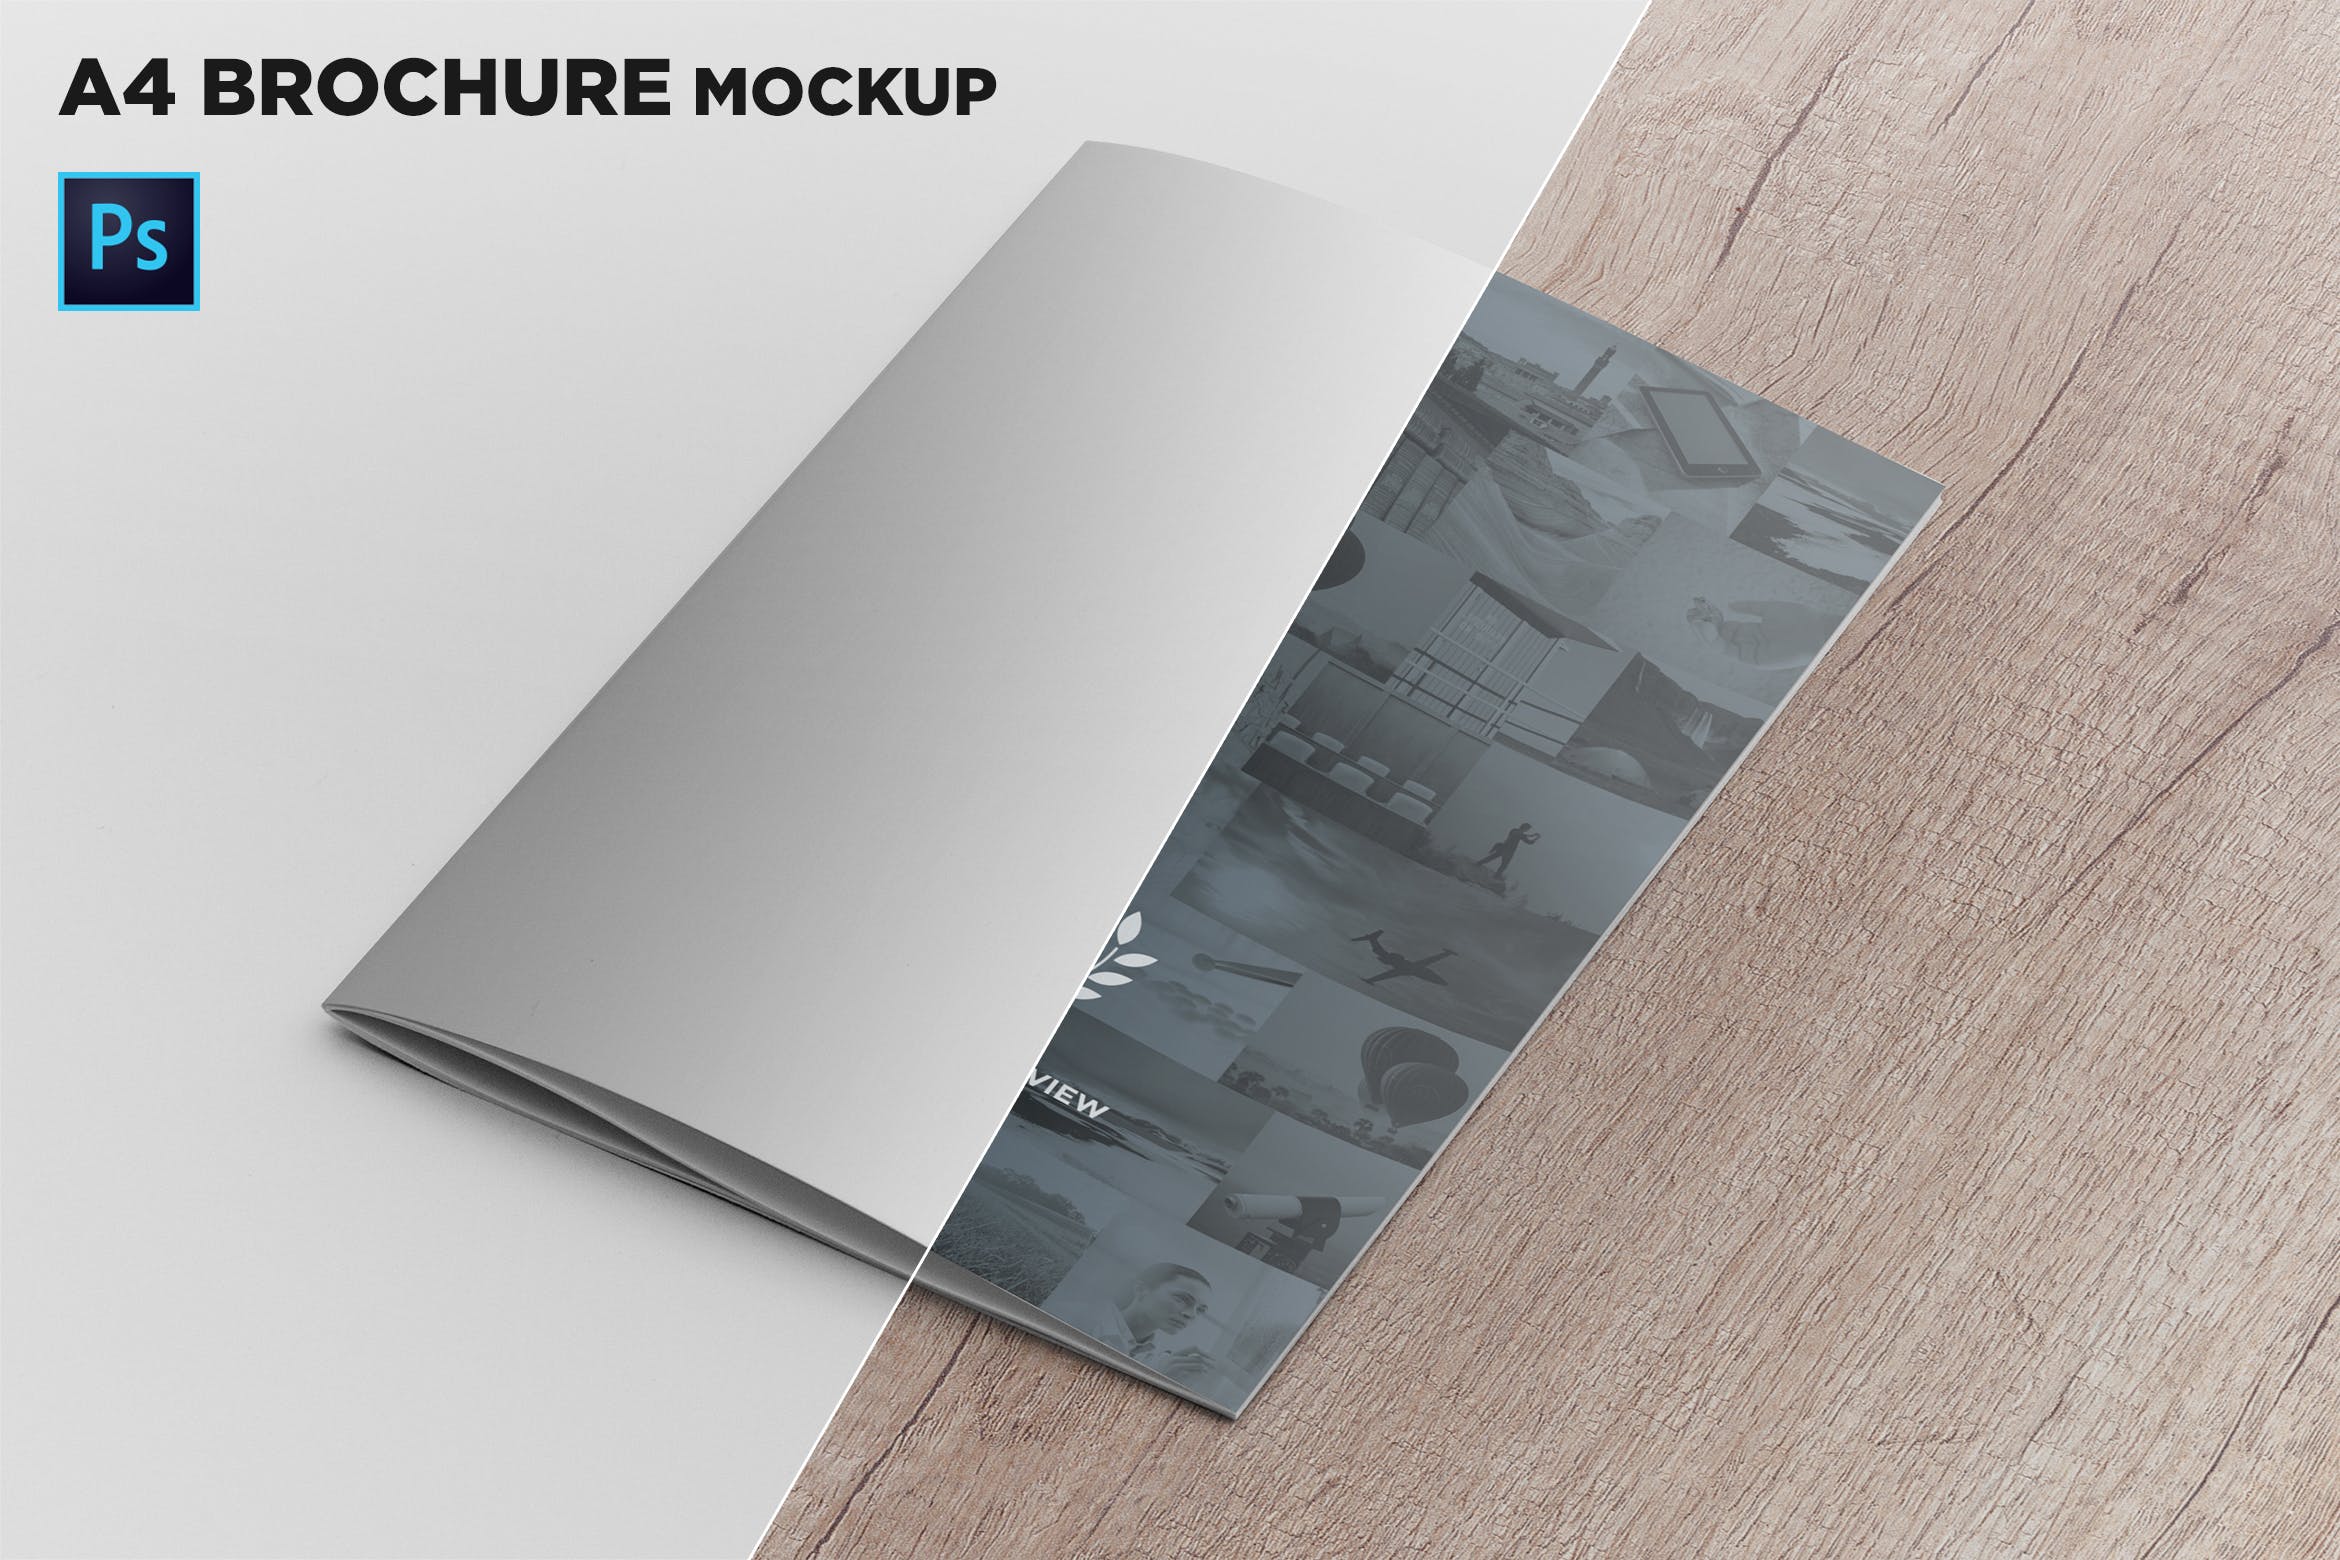 A4尺寸企业/品牌宣传册封面效果图样机大洋岛精选模板 A4 Brochure Cover Mockup Perspective View插图